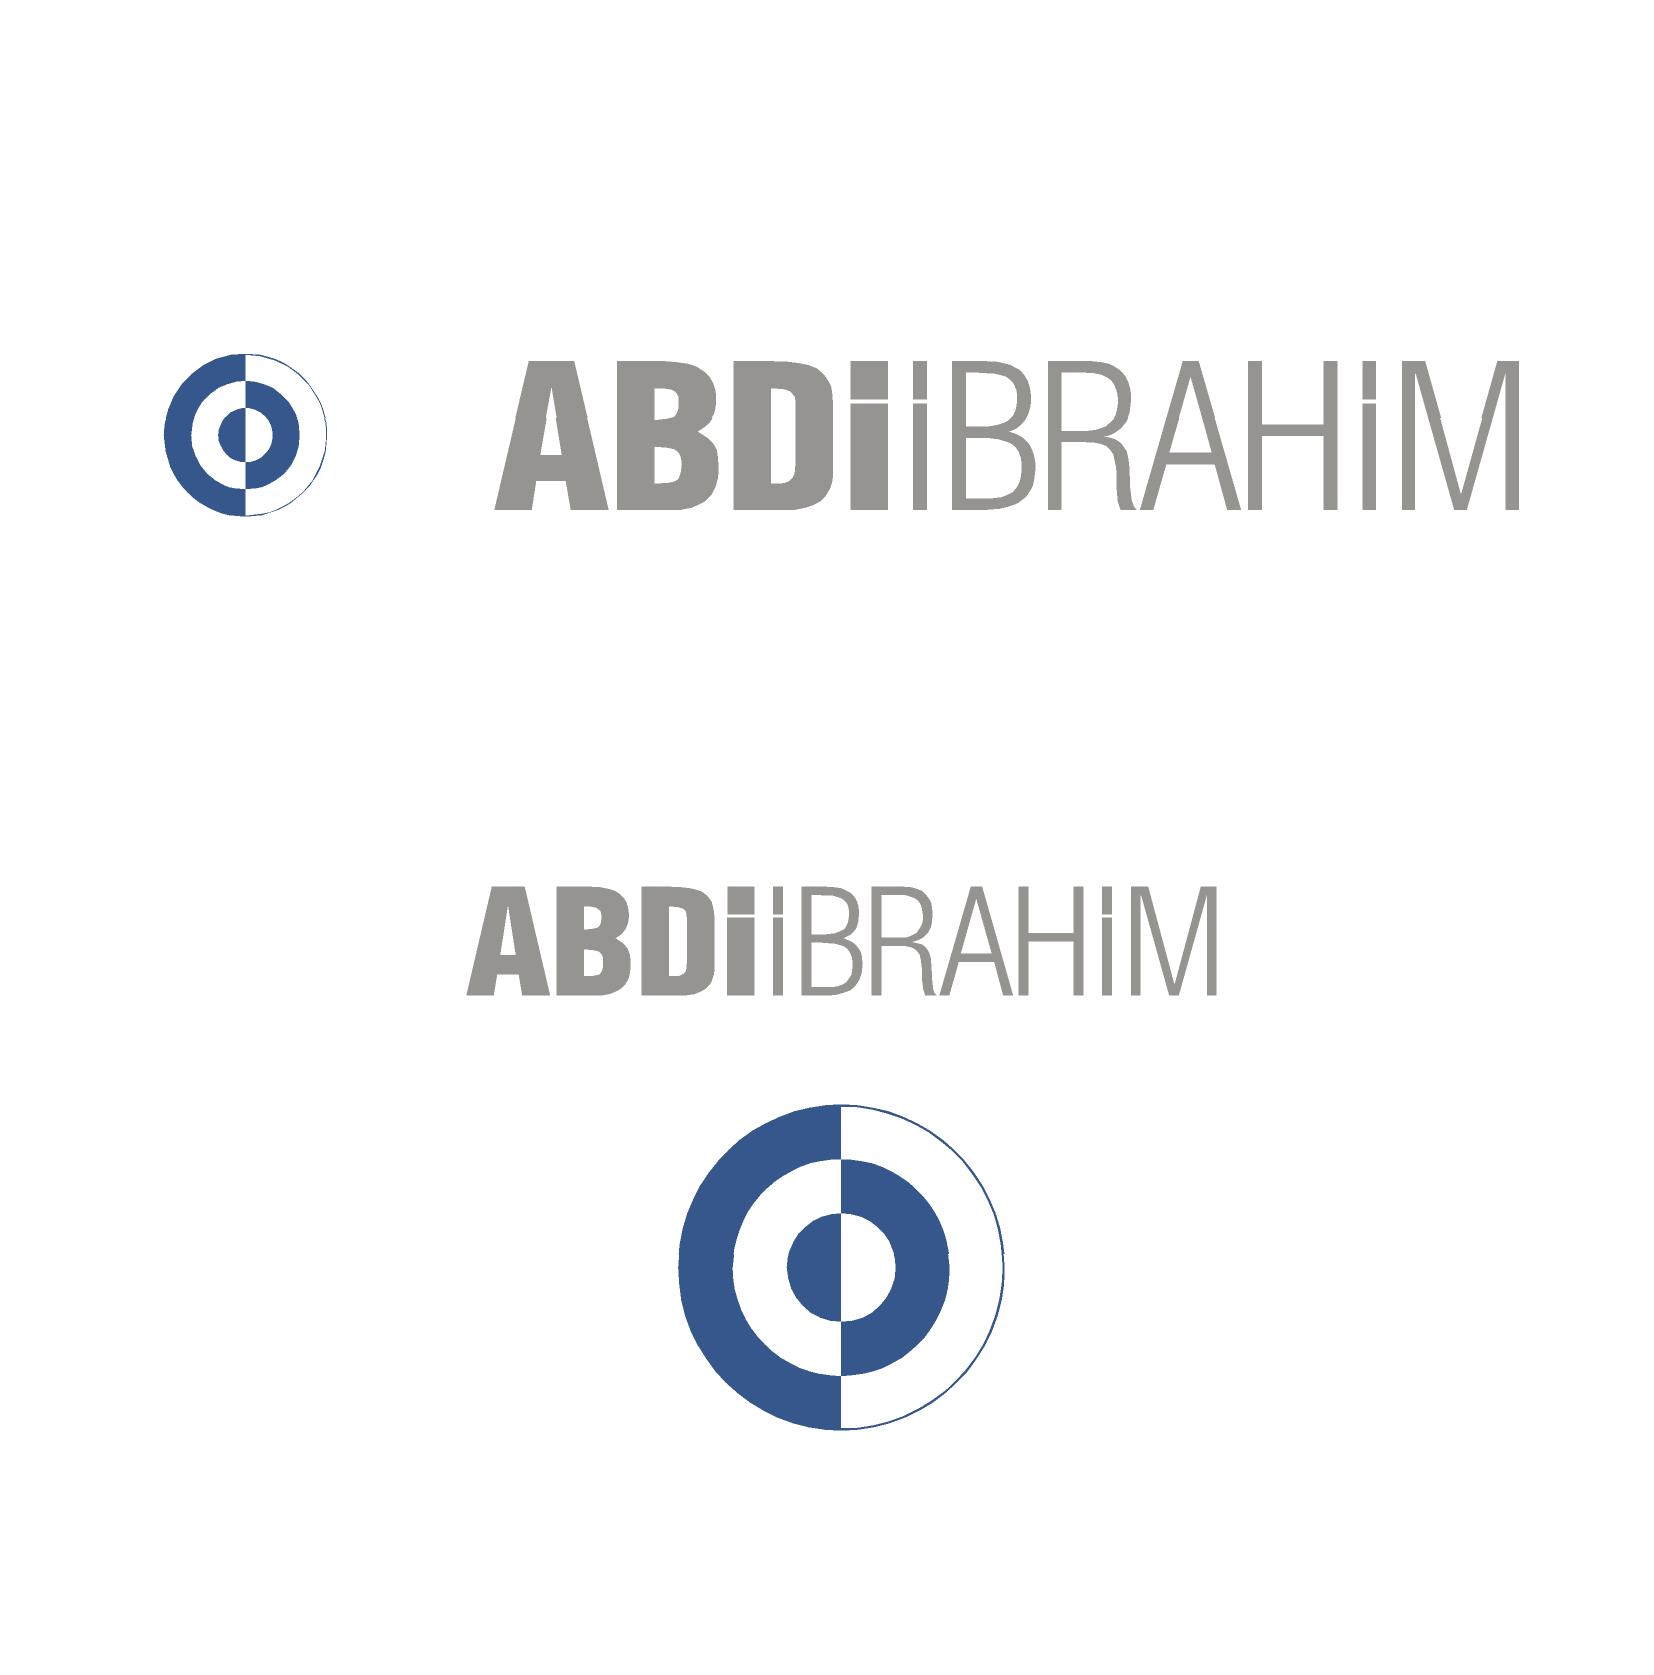 Abdi Ibrahim Logo PNG - 111725